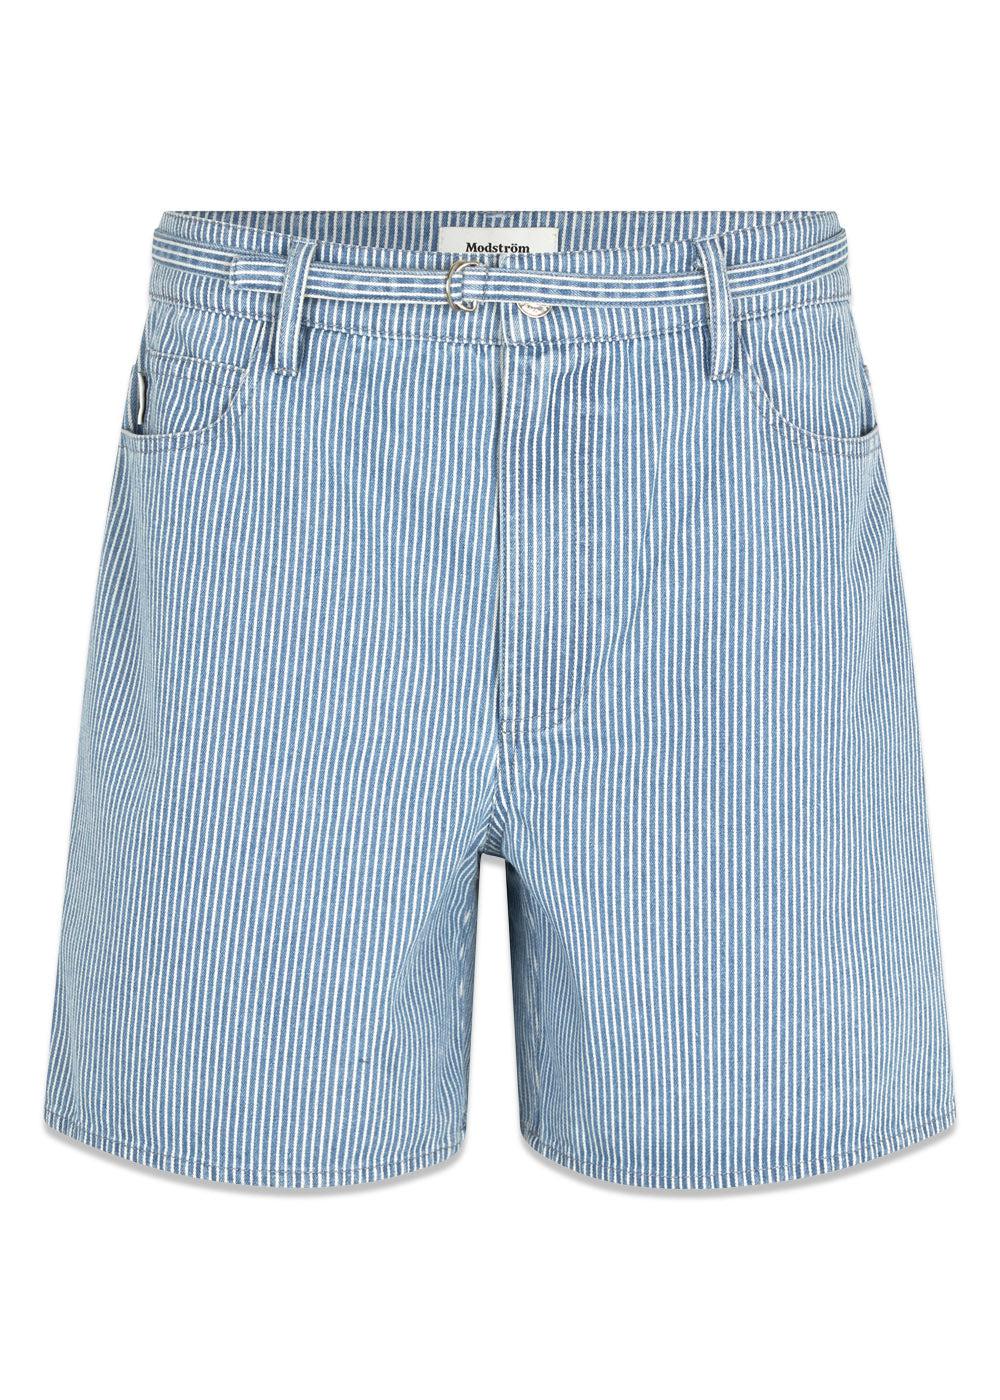 IsoldeMD shorts - Soft Blue Stripe